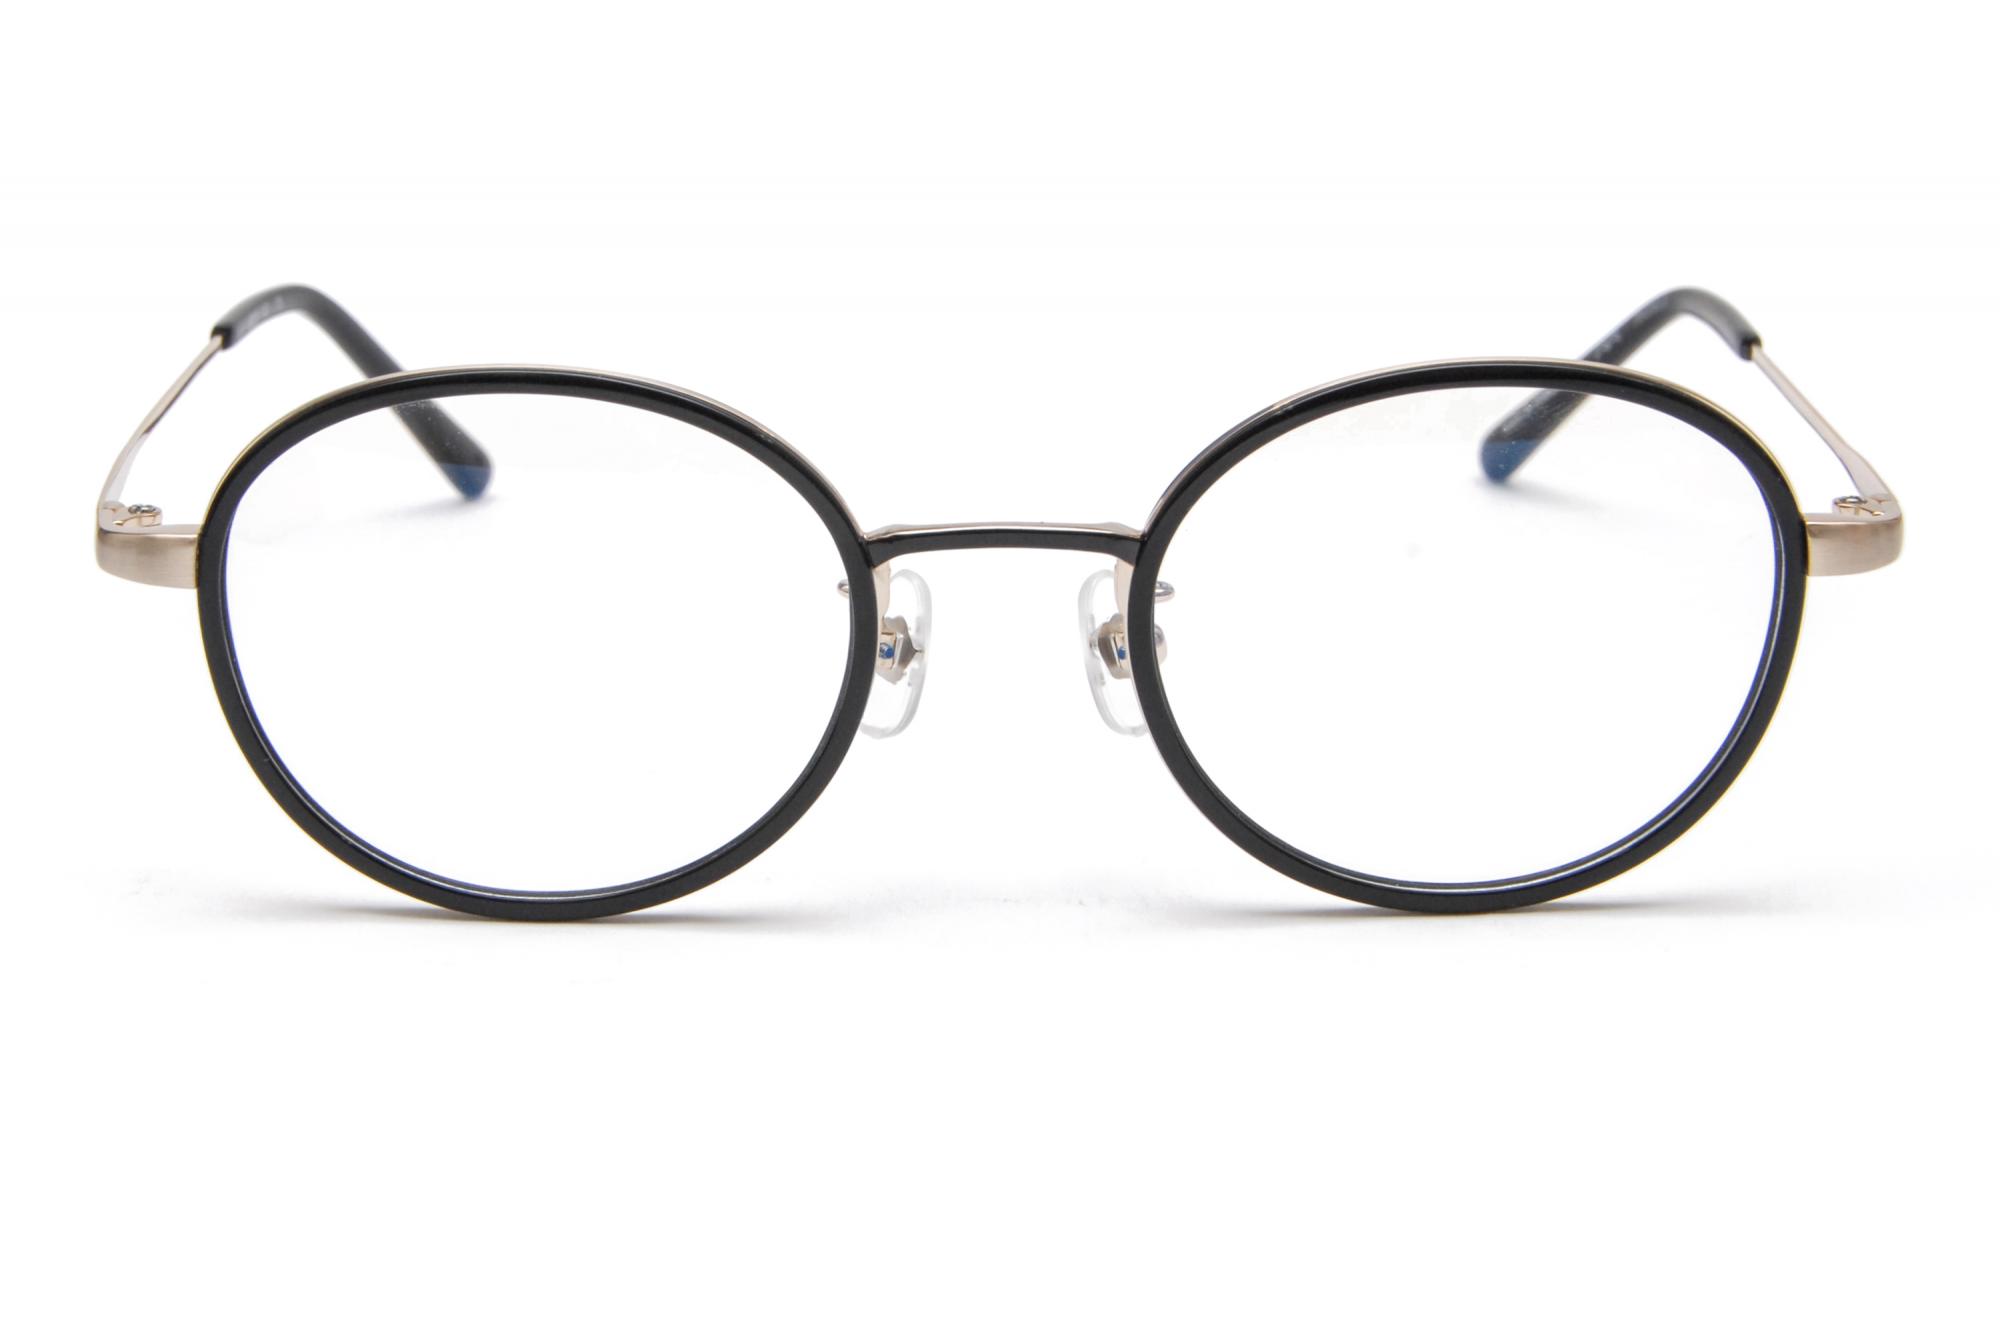 VIKTOR&ROLF (ヴィクター＆ロルフ) 70-0161-3 セル巻き ラウンド メガネ BLACK×SILVER/ コンビ ブラック シルバー  眼鏡